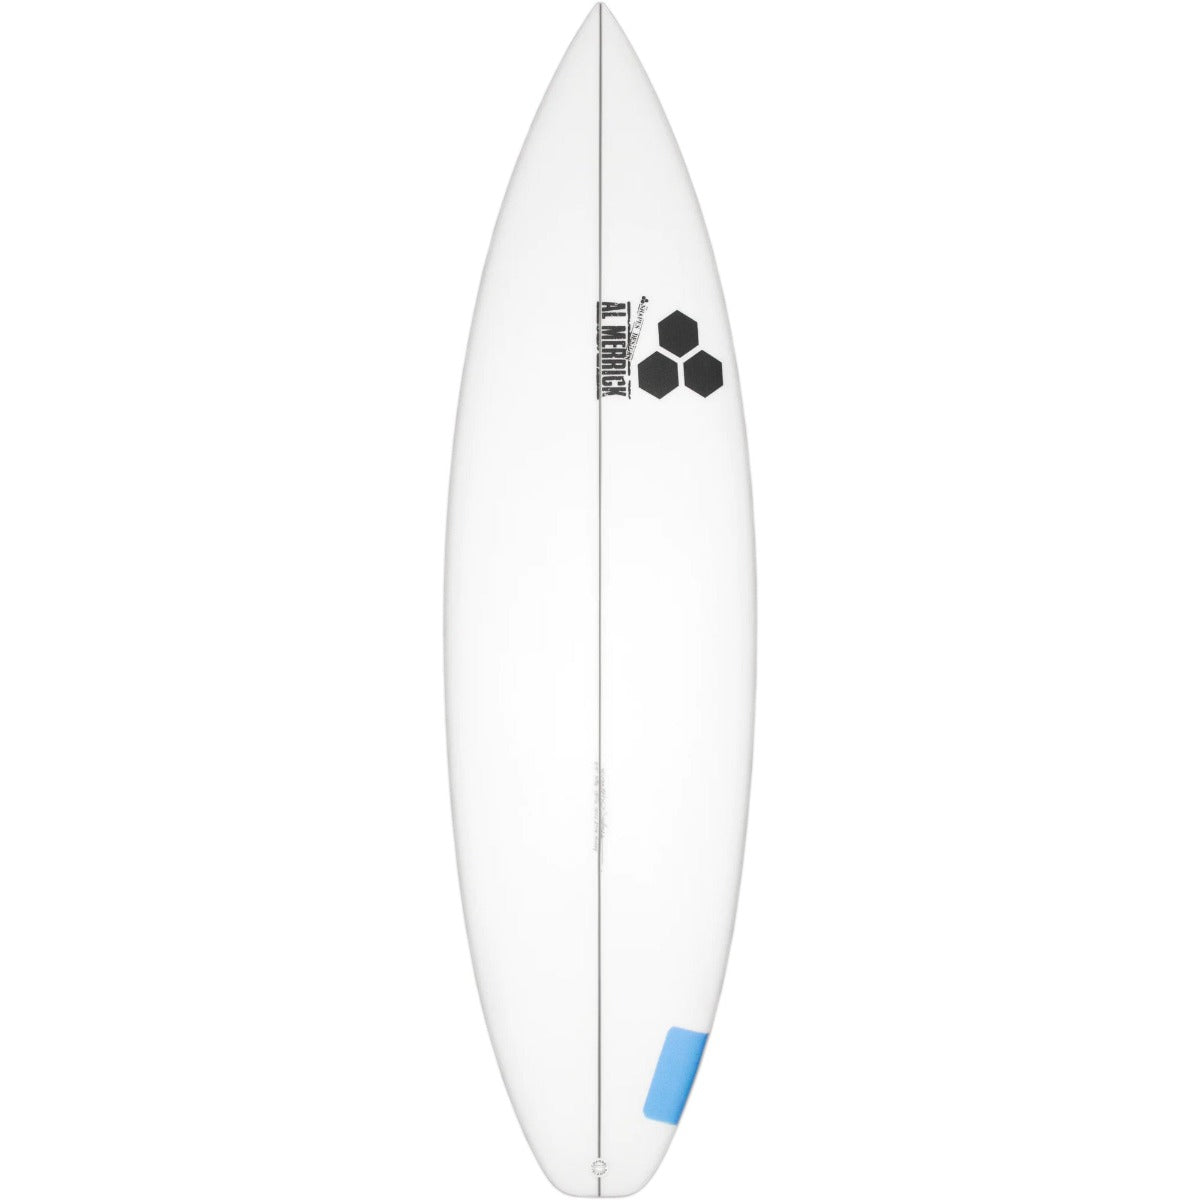 channel-islands-happy-surfboard-performance-shortboard-preorder-bottom-futures-galway-ireland-blacksheepsurfco-deck